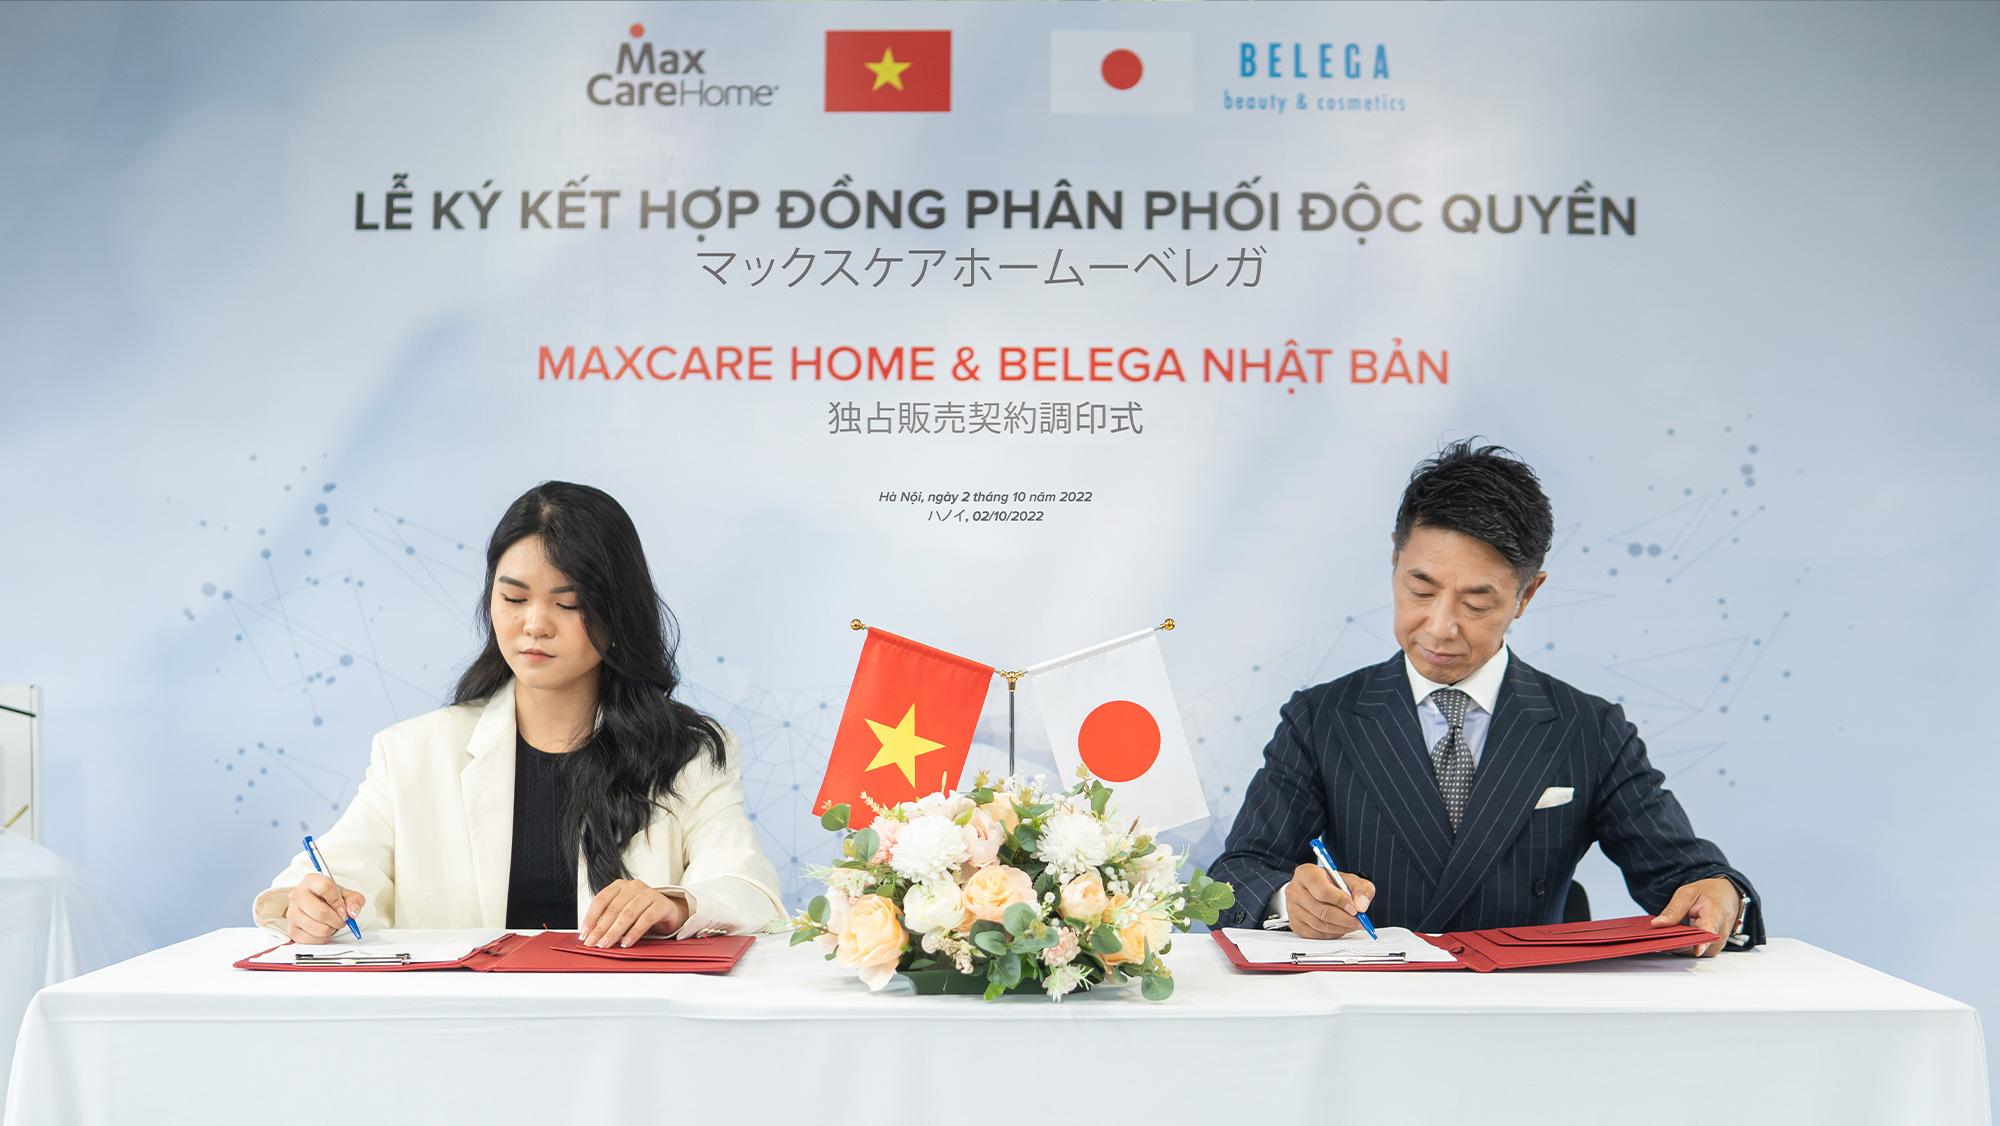 Maxcare-Home-phan-pho-doc-quyen-may-nang-co-Belega